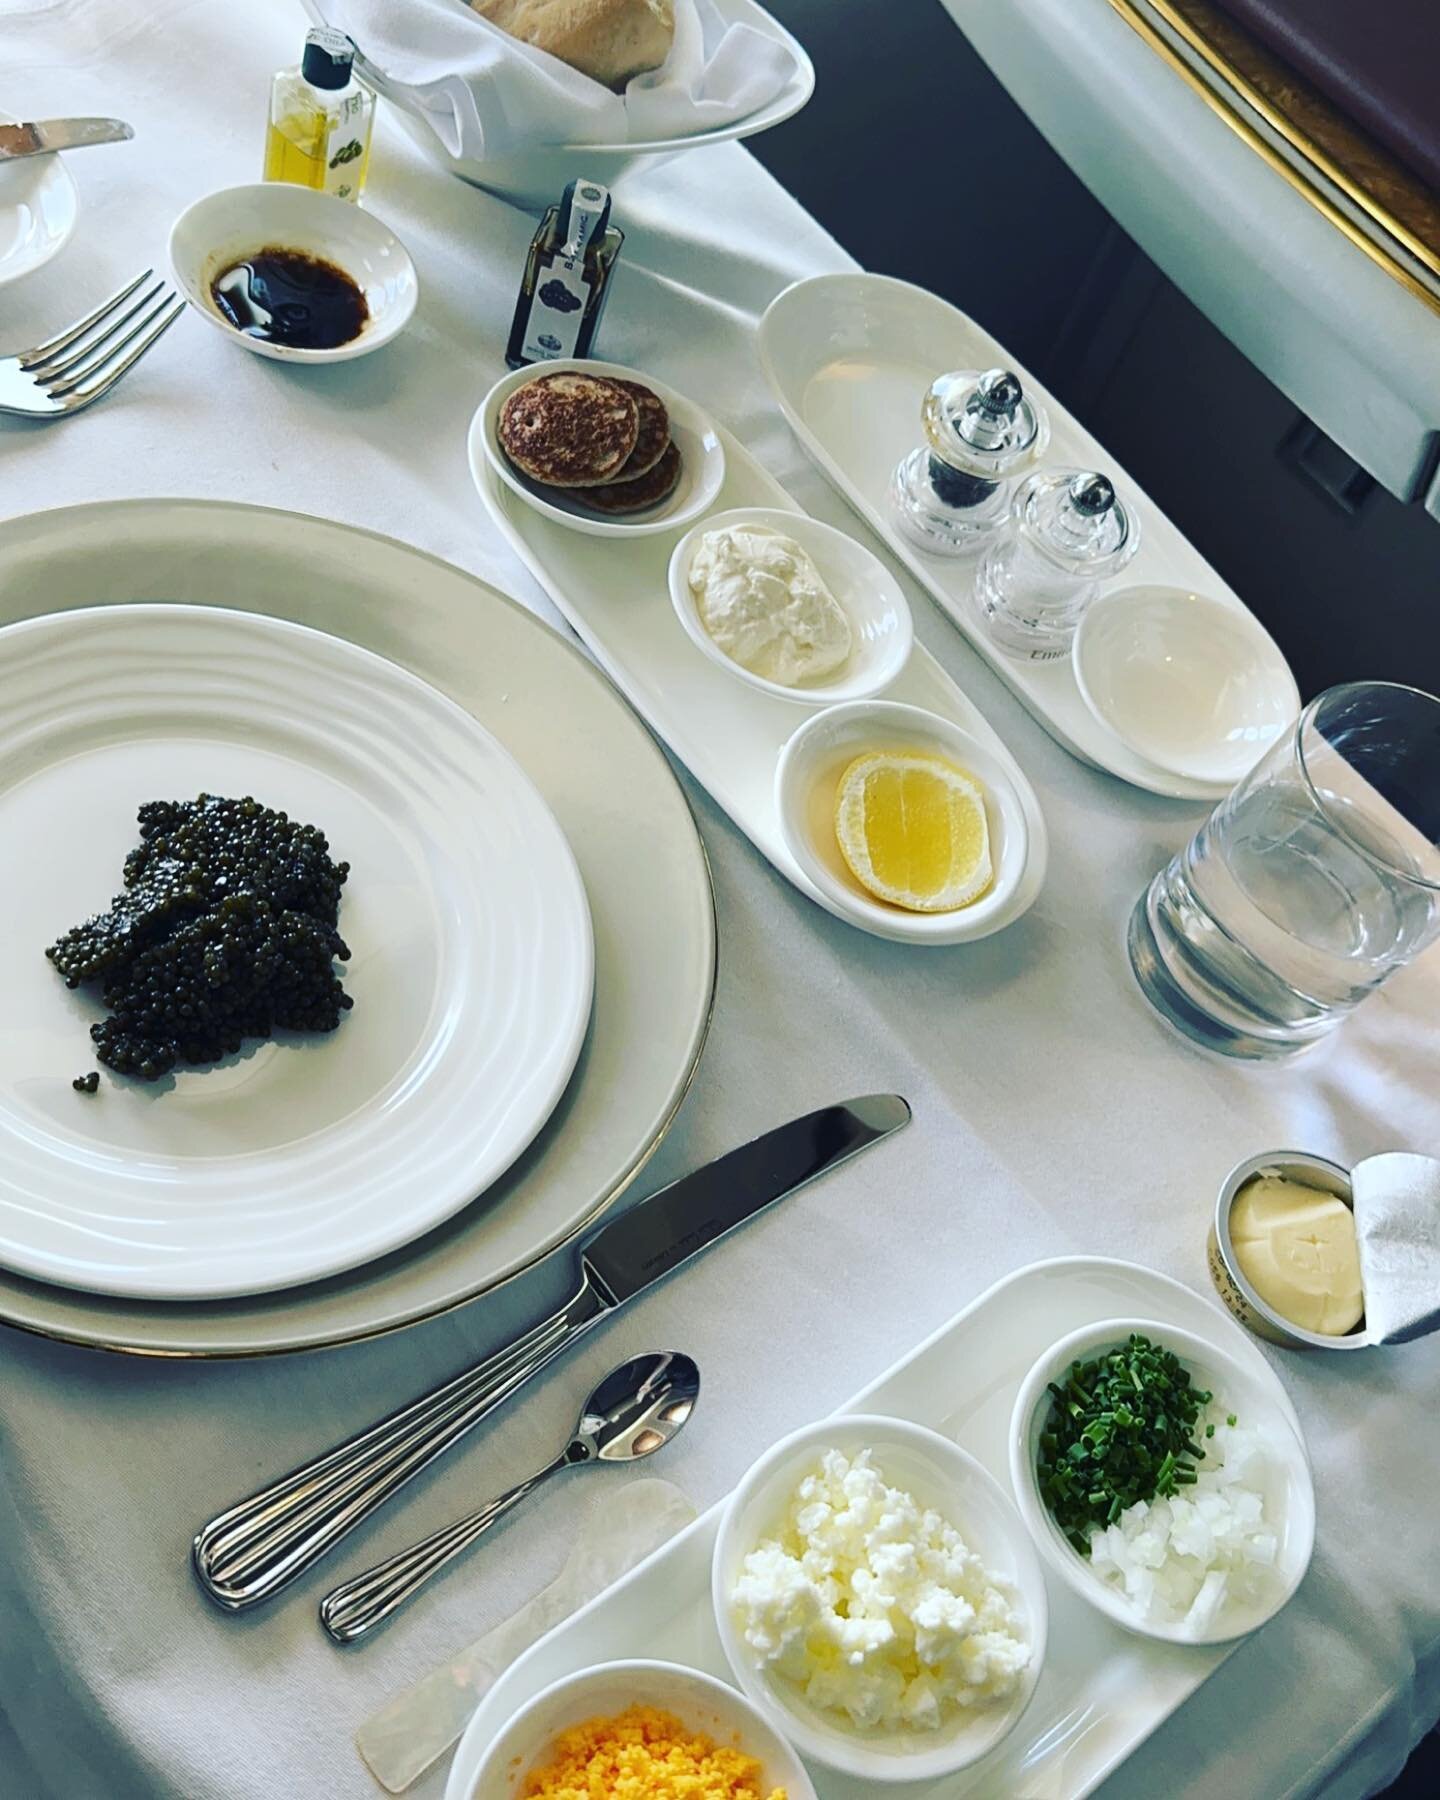 Caviar starter on Emirates First Class ✈️
.
.
.
.
#firstclass #admontravels #caviar #luxury #luxuryliving #lux #luxurylifestyle #travel